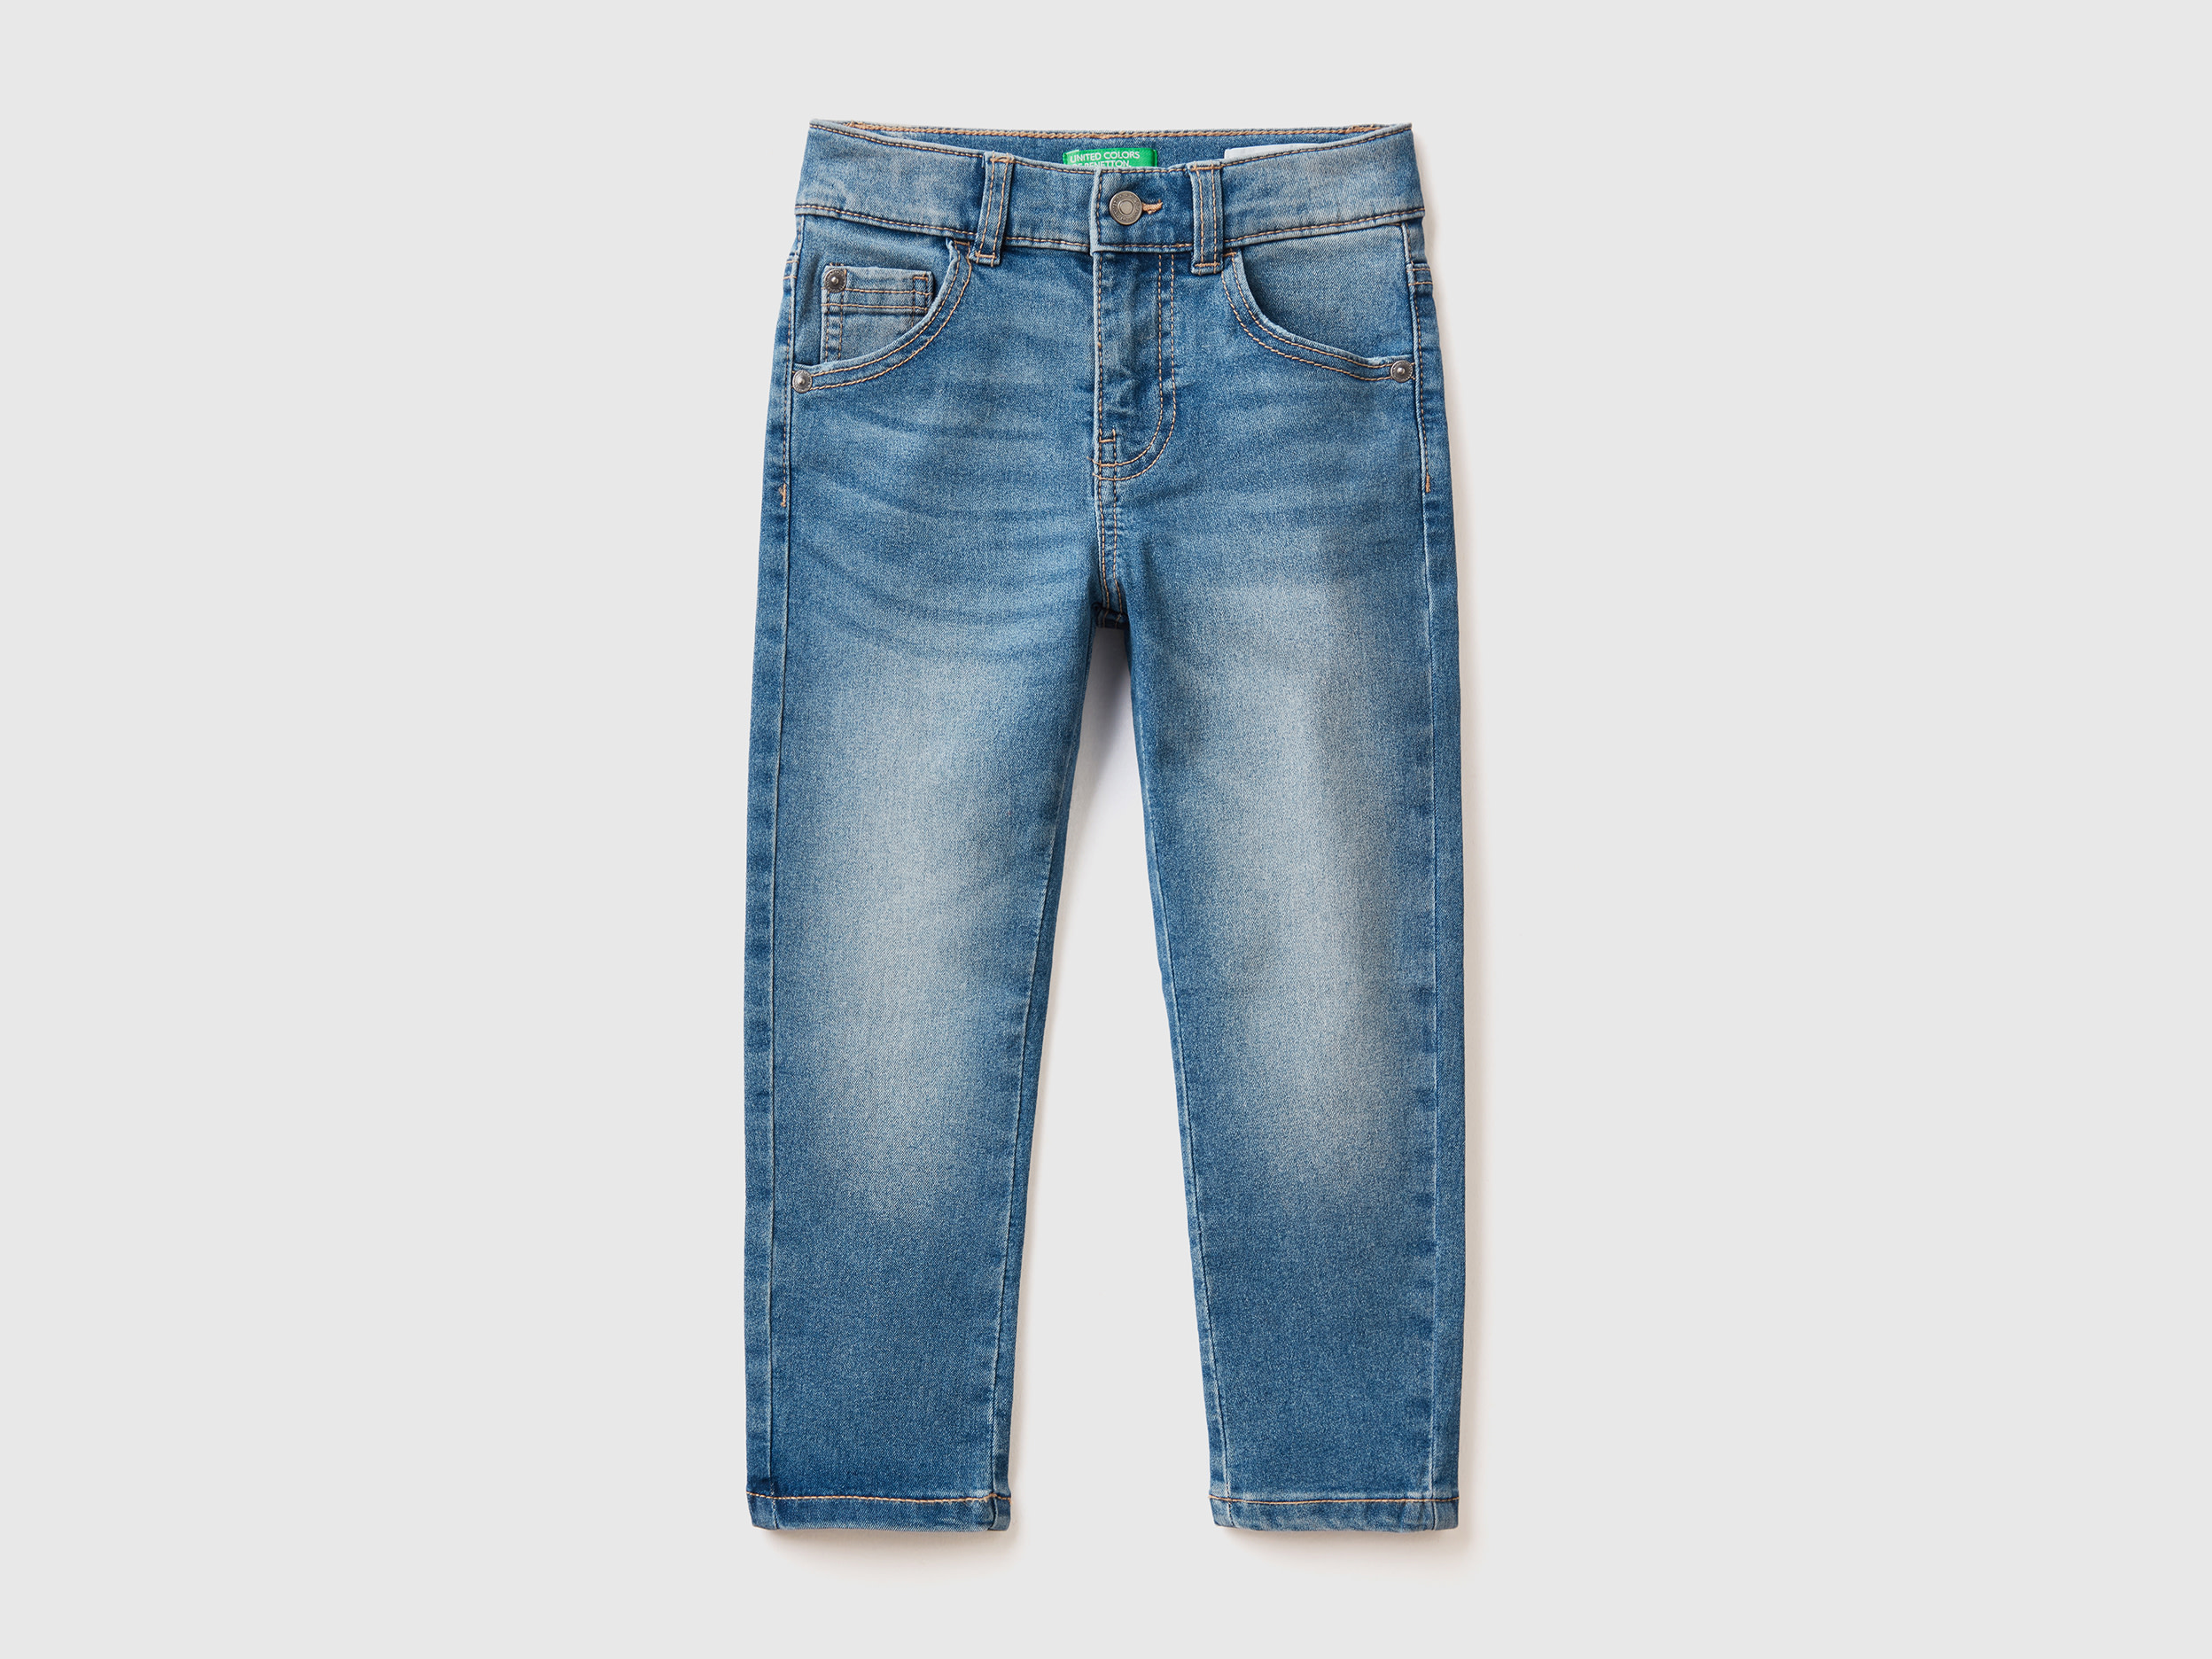 Benetton, Vintage Look Skinny Fit Jeans, size 12-18, Sky Blue, Kids